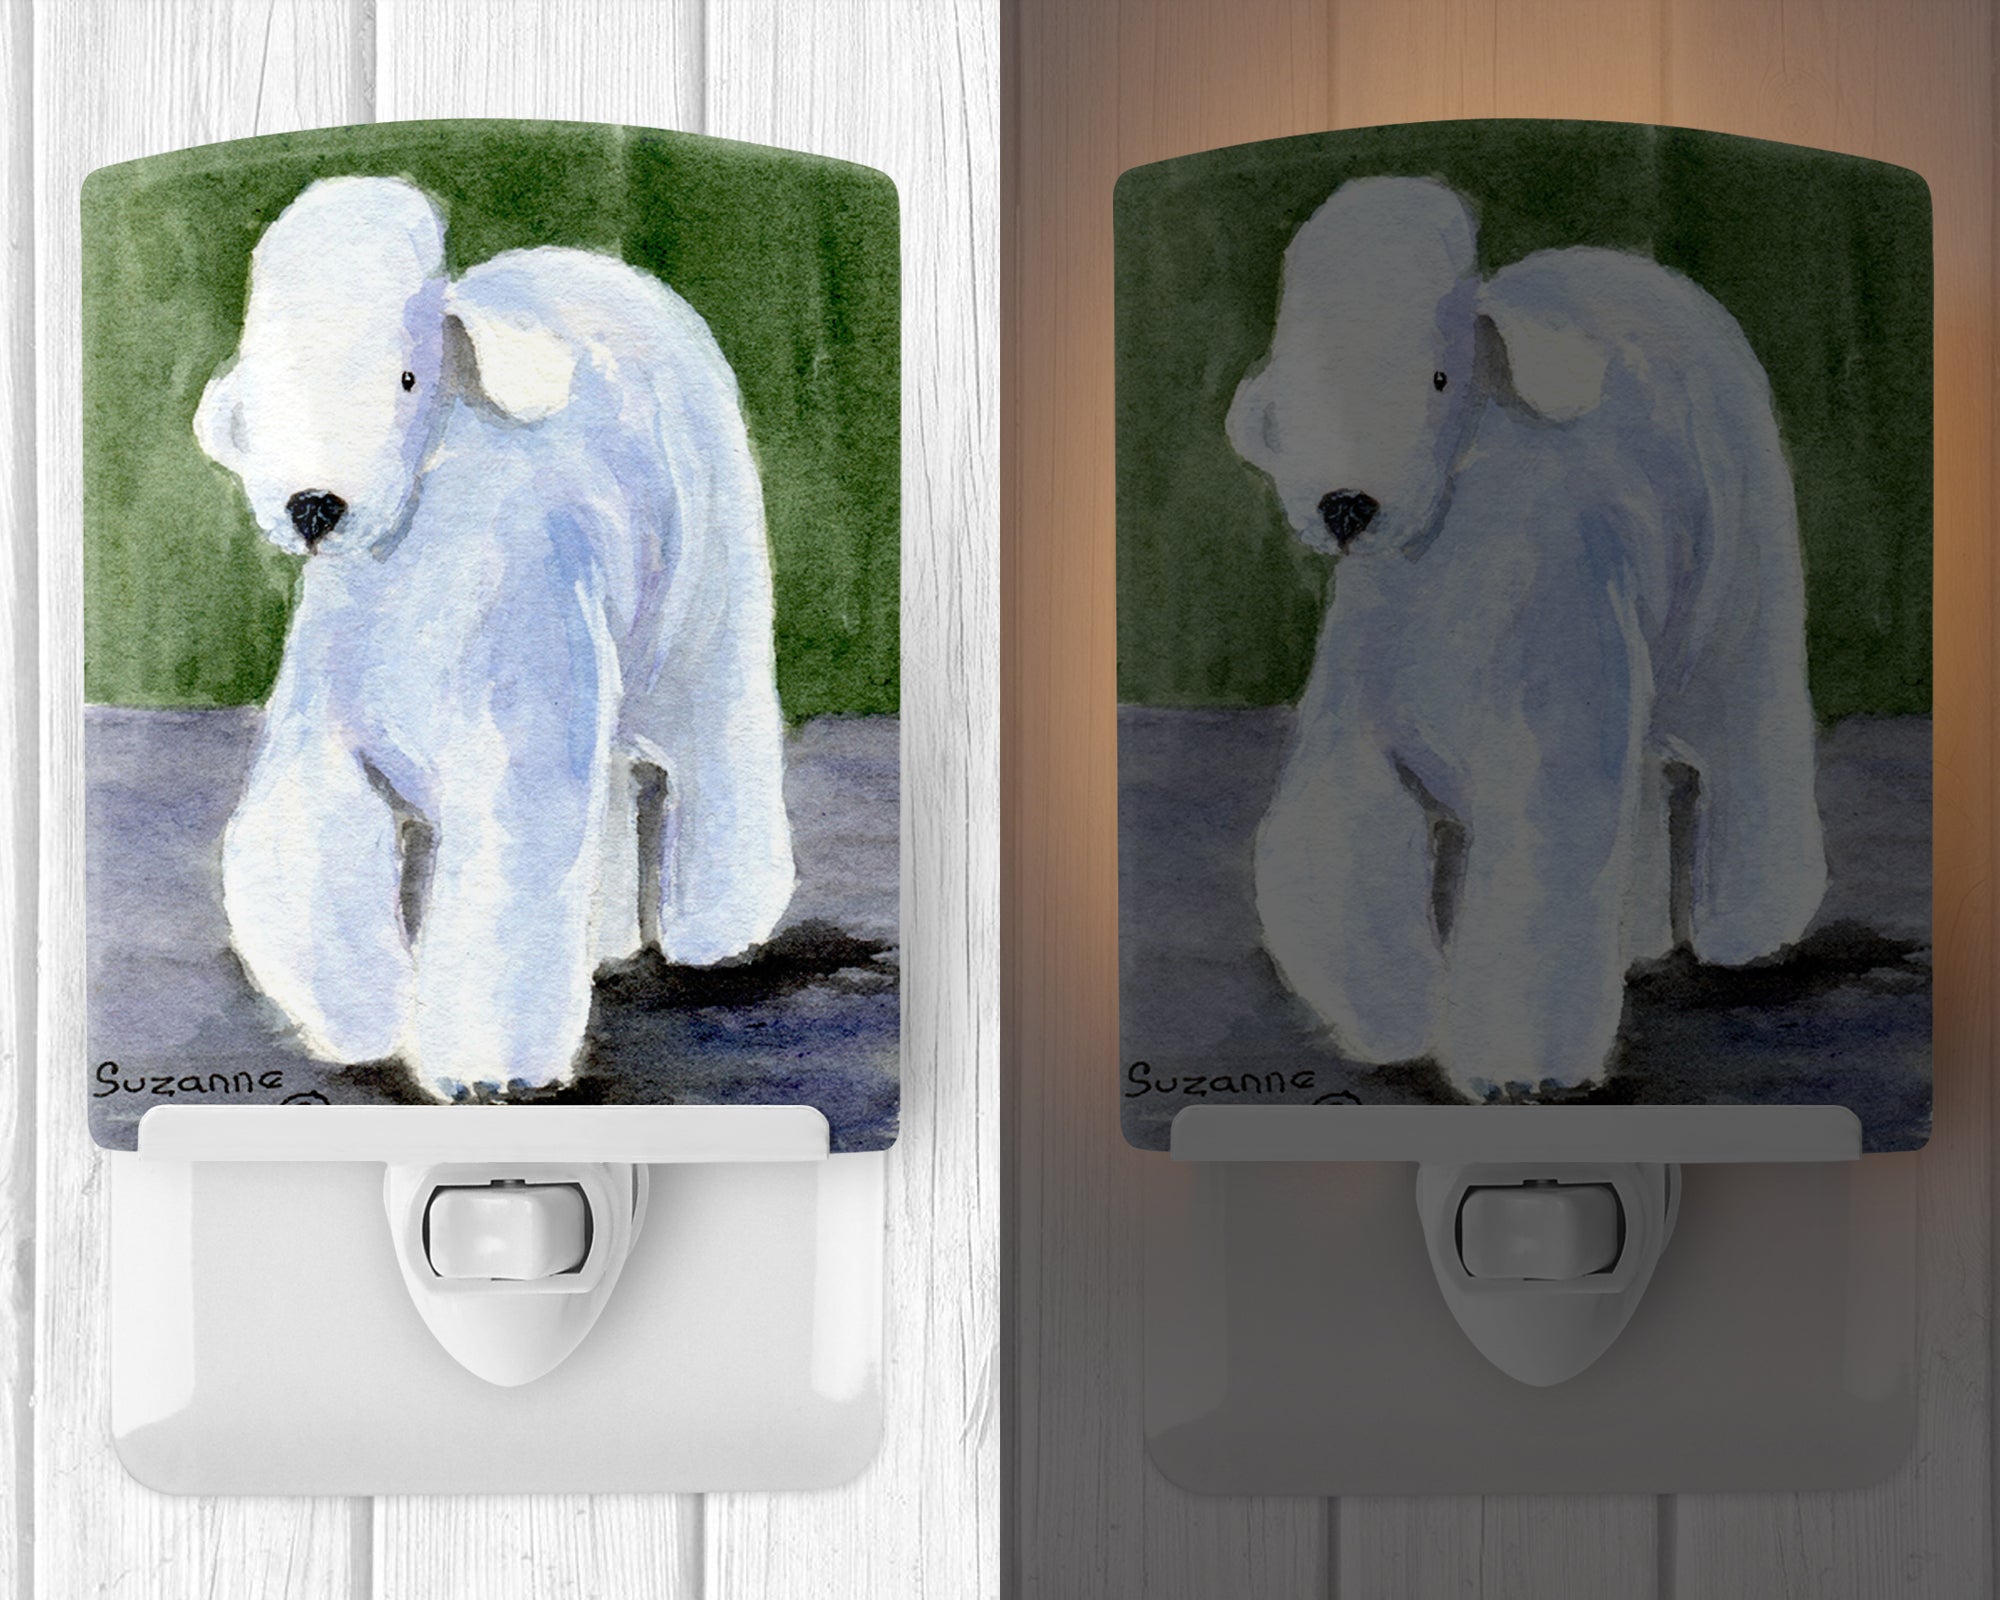 Bedlington Terrier Ceramic Night Light SS8683CNL - the-store.com